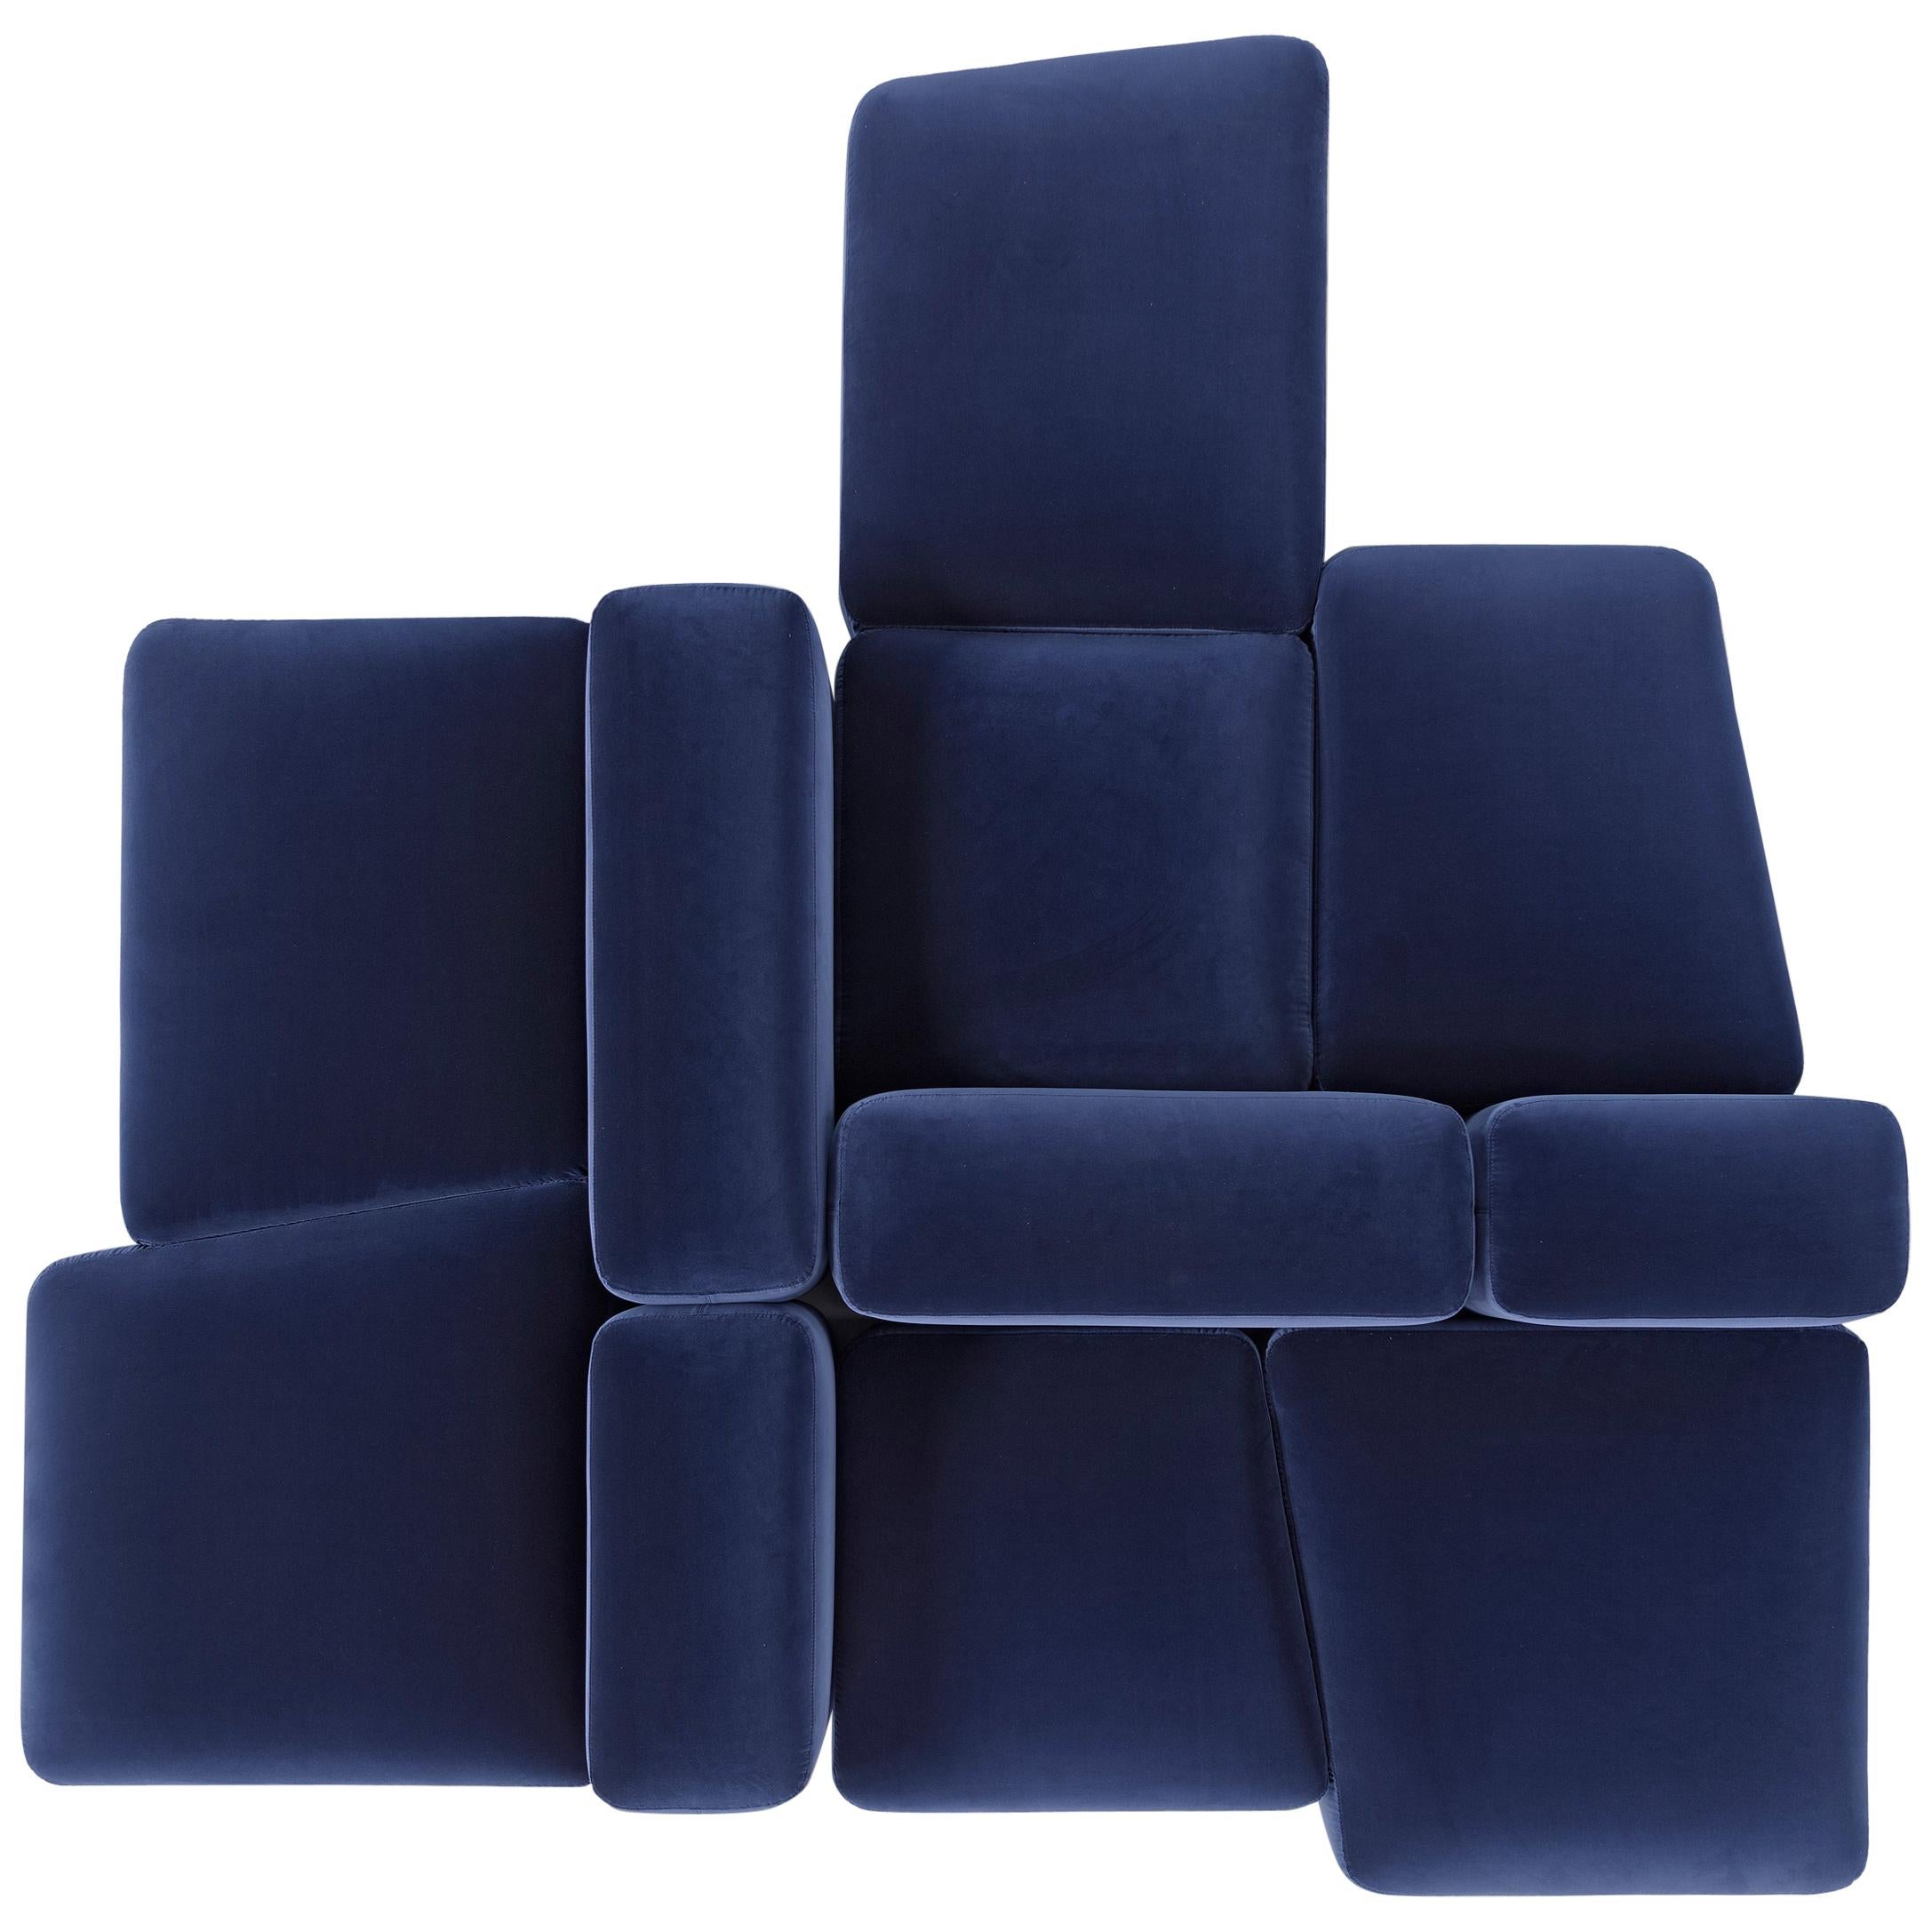 Modular and Customizable Sofa 'Lapis' E027 'Many Layouts and Fabrics Available'